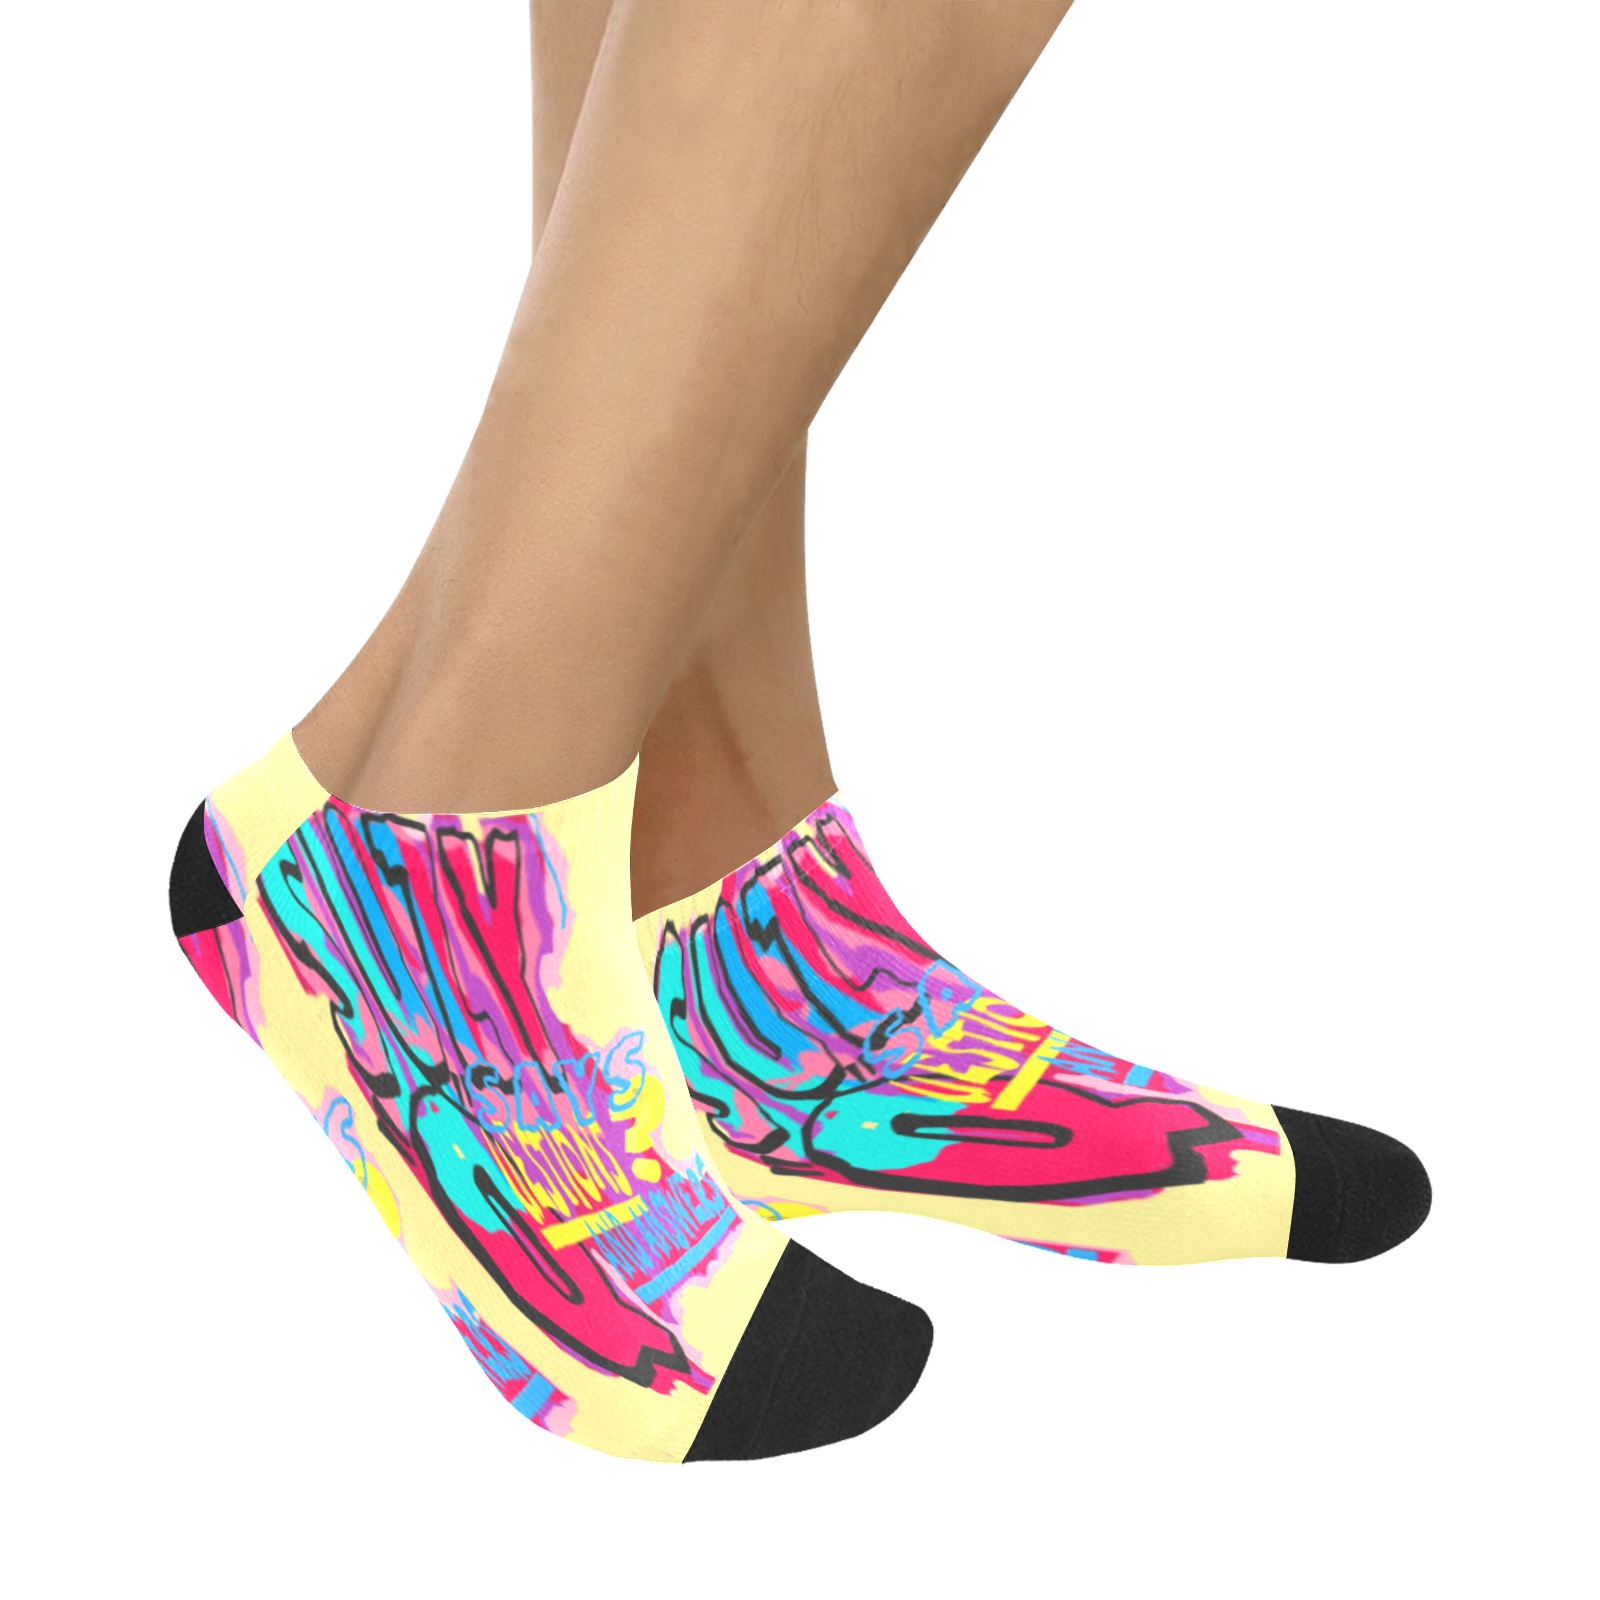 SUZY.Q.LOGO.CREAM Women's Ankle Socks